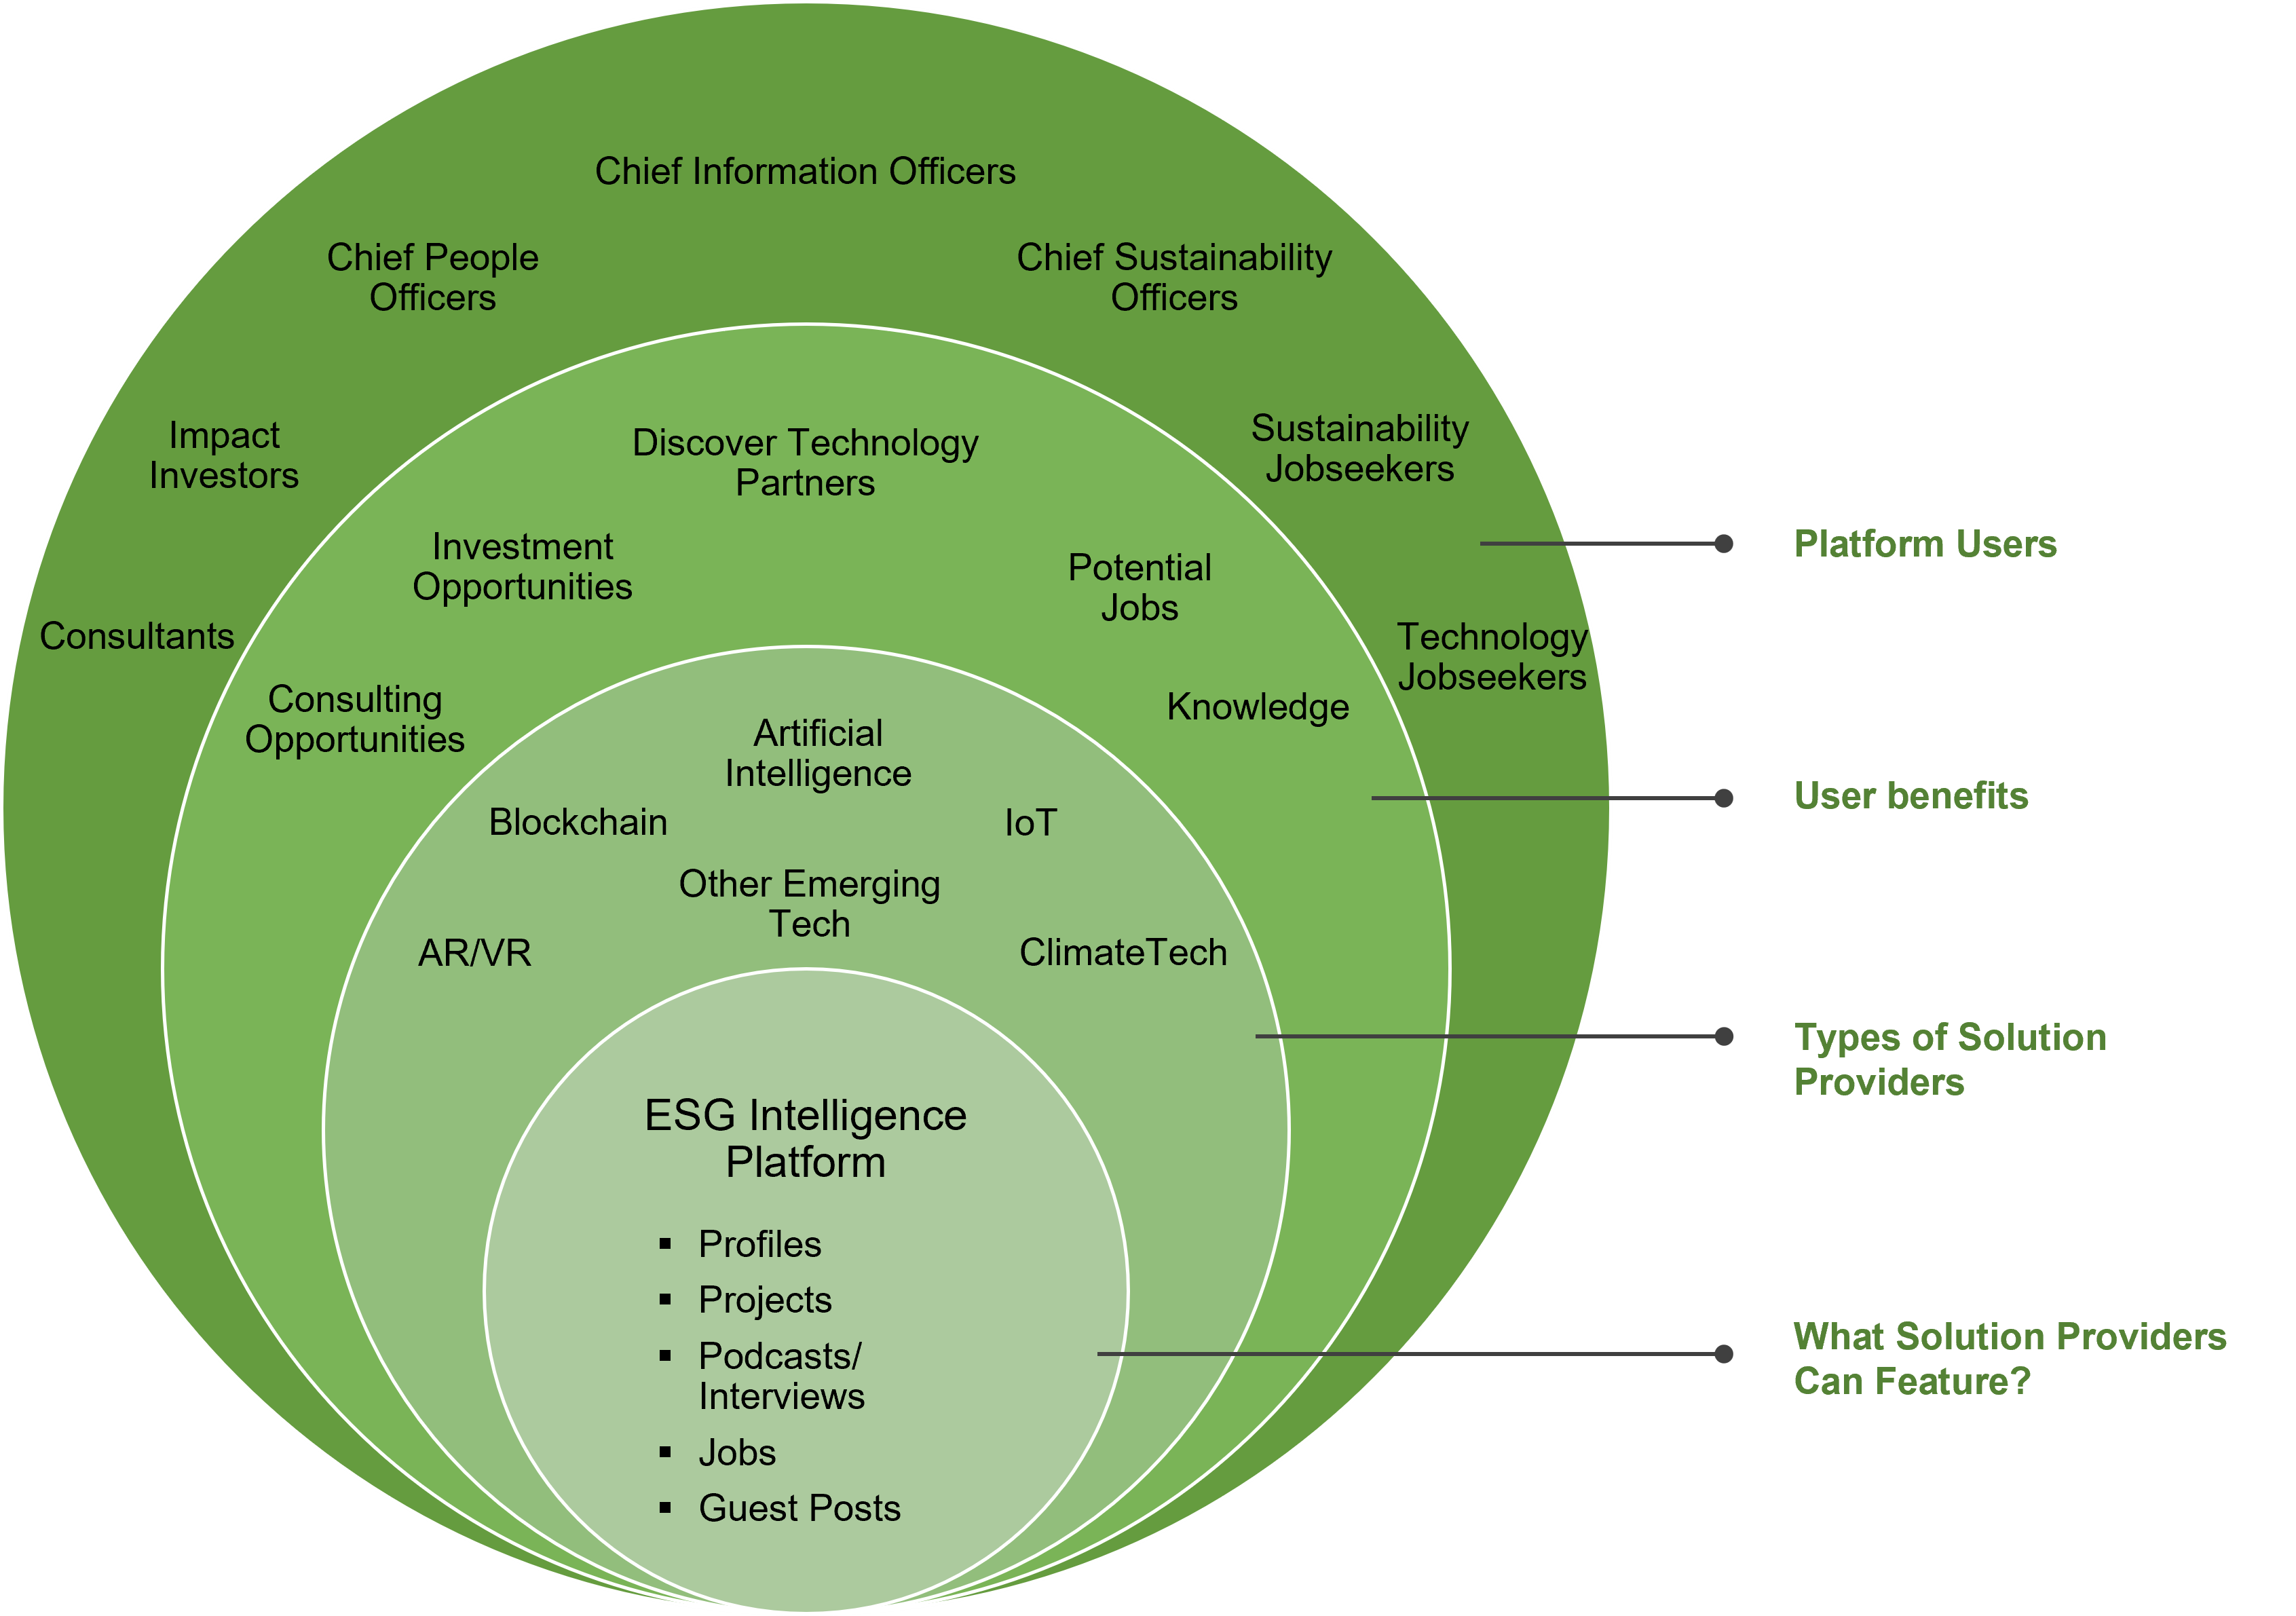 ESG Intelligence Platform